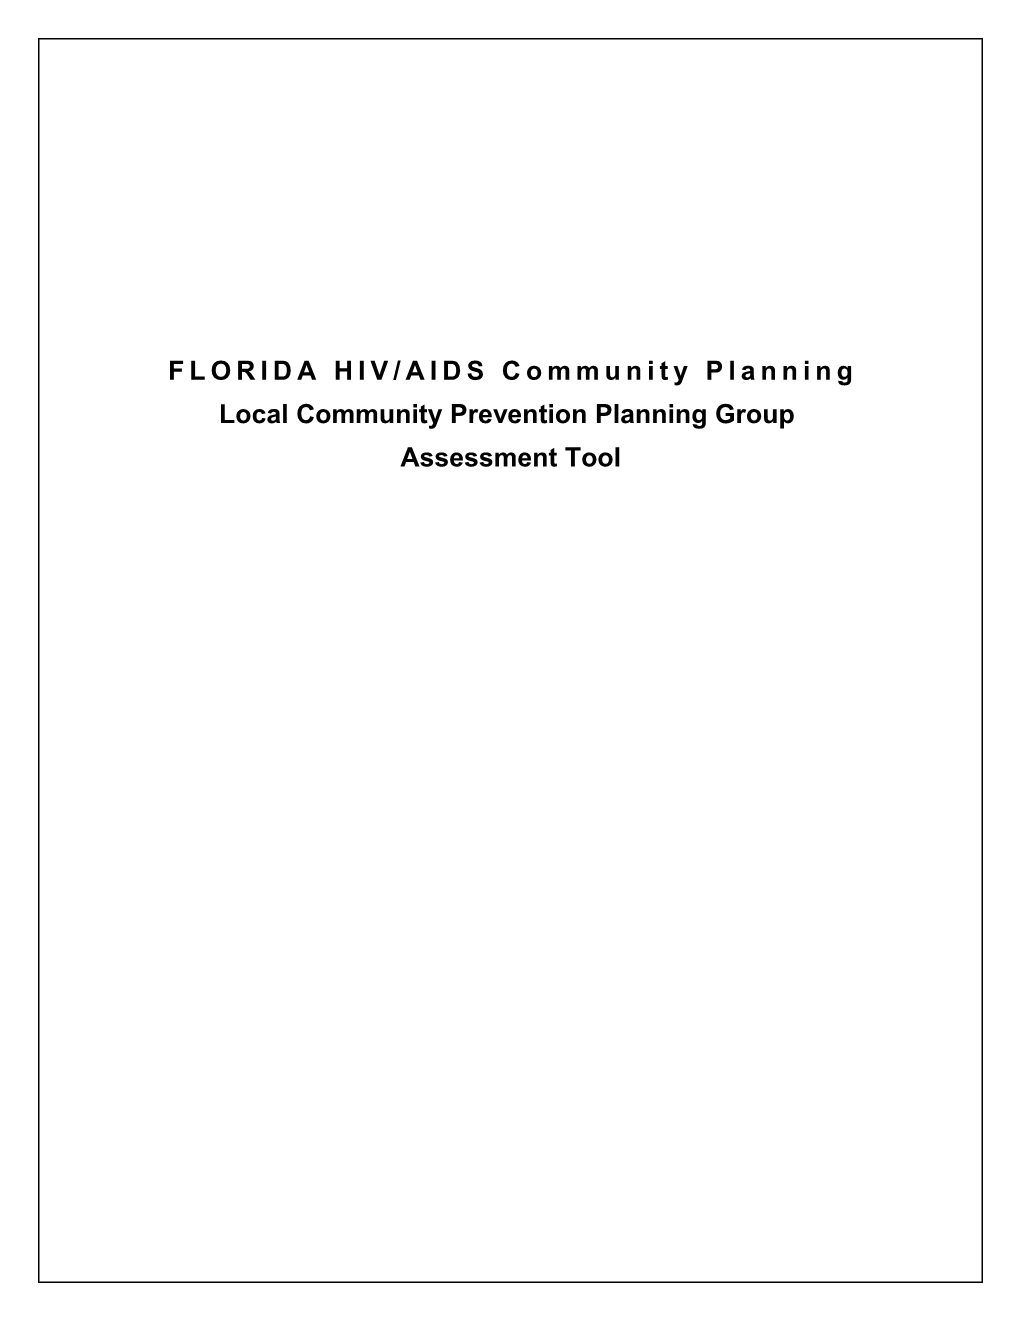 Community Planning Partnership Site Visit Handbook